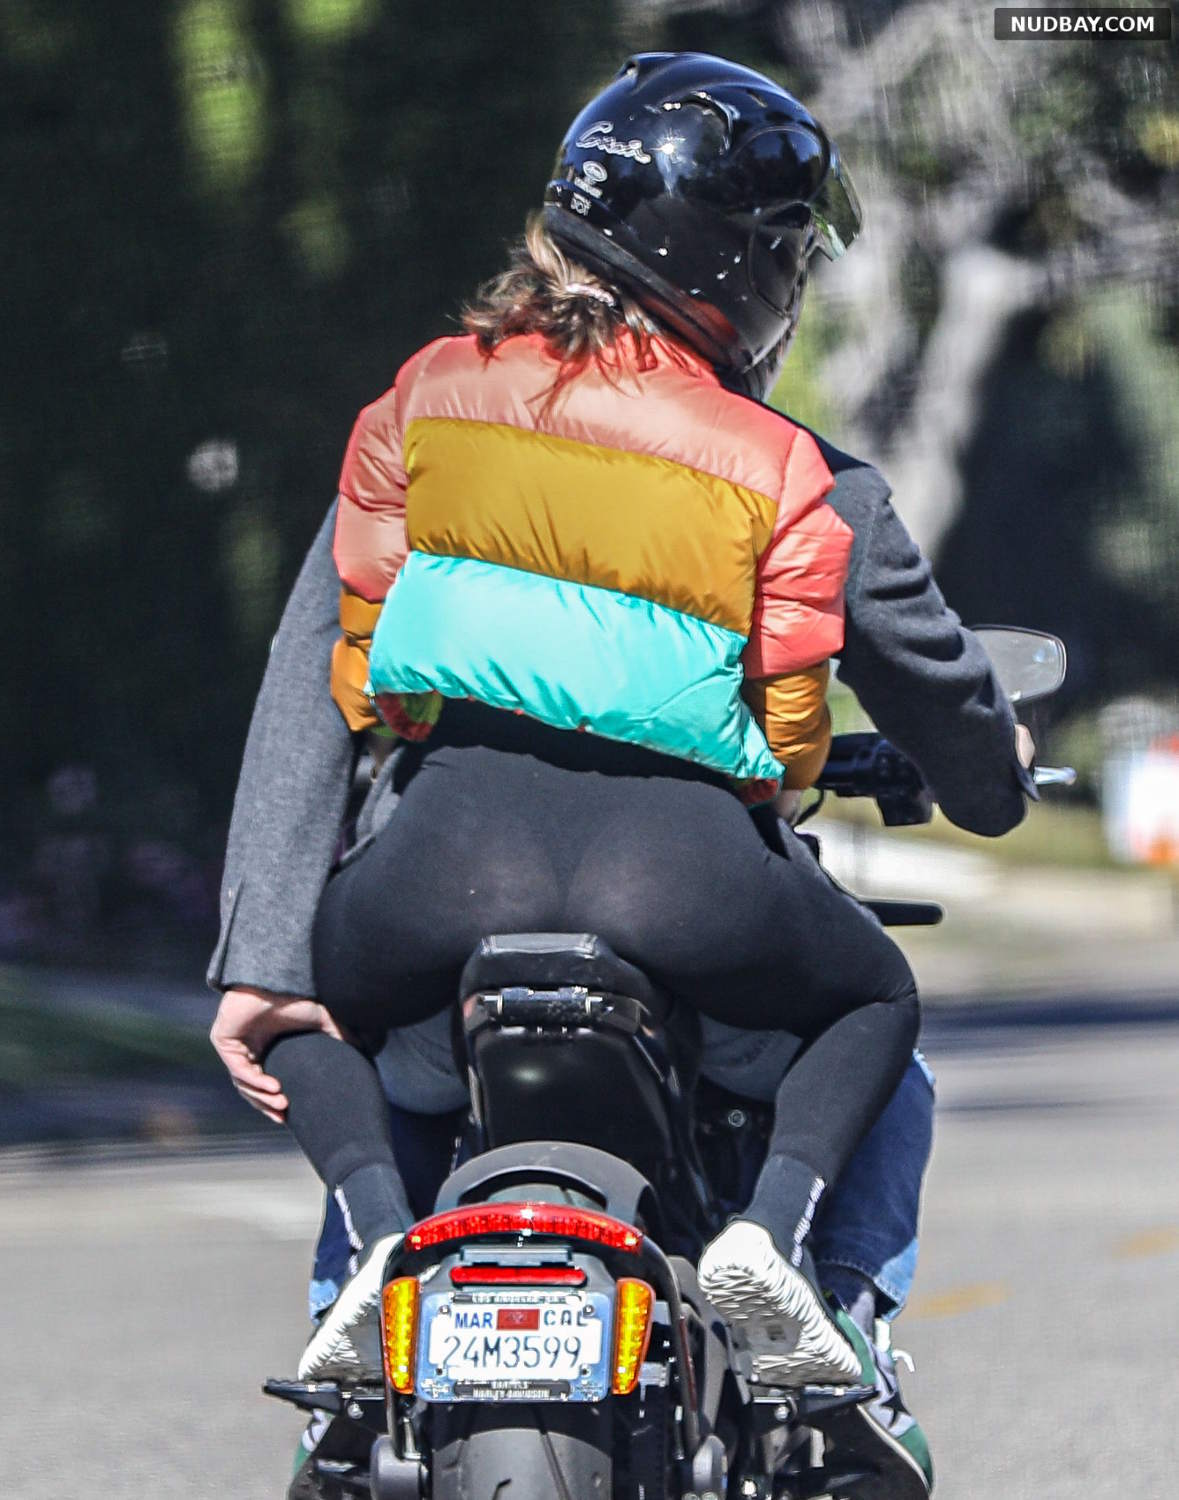 Ana De Armas riding Harley Davidson in Brentwood Nov 27 2020